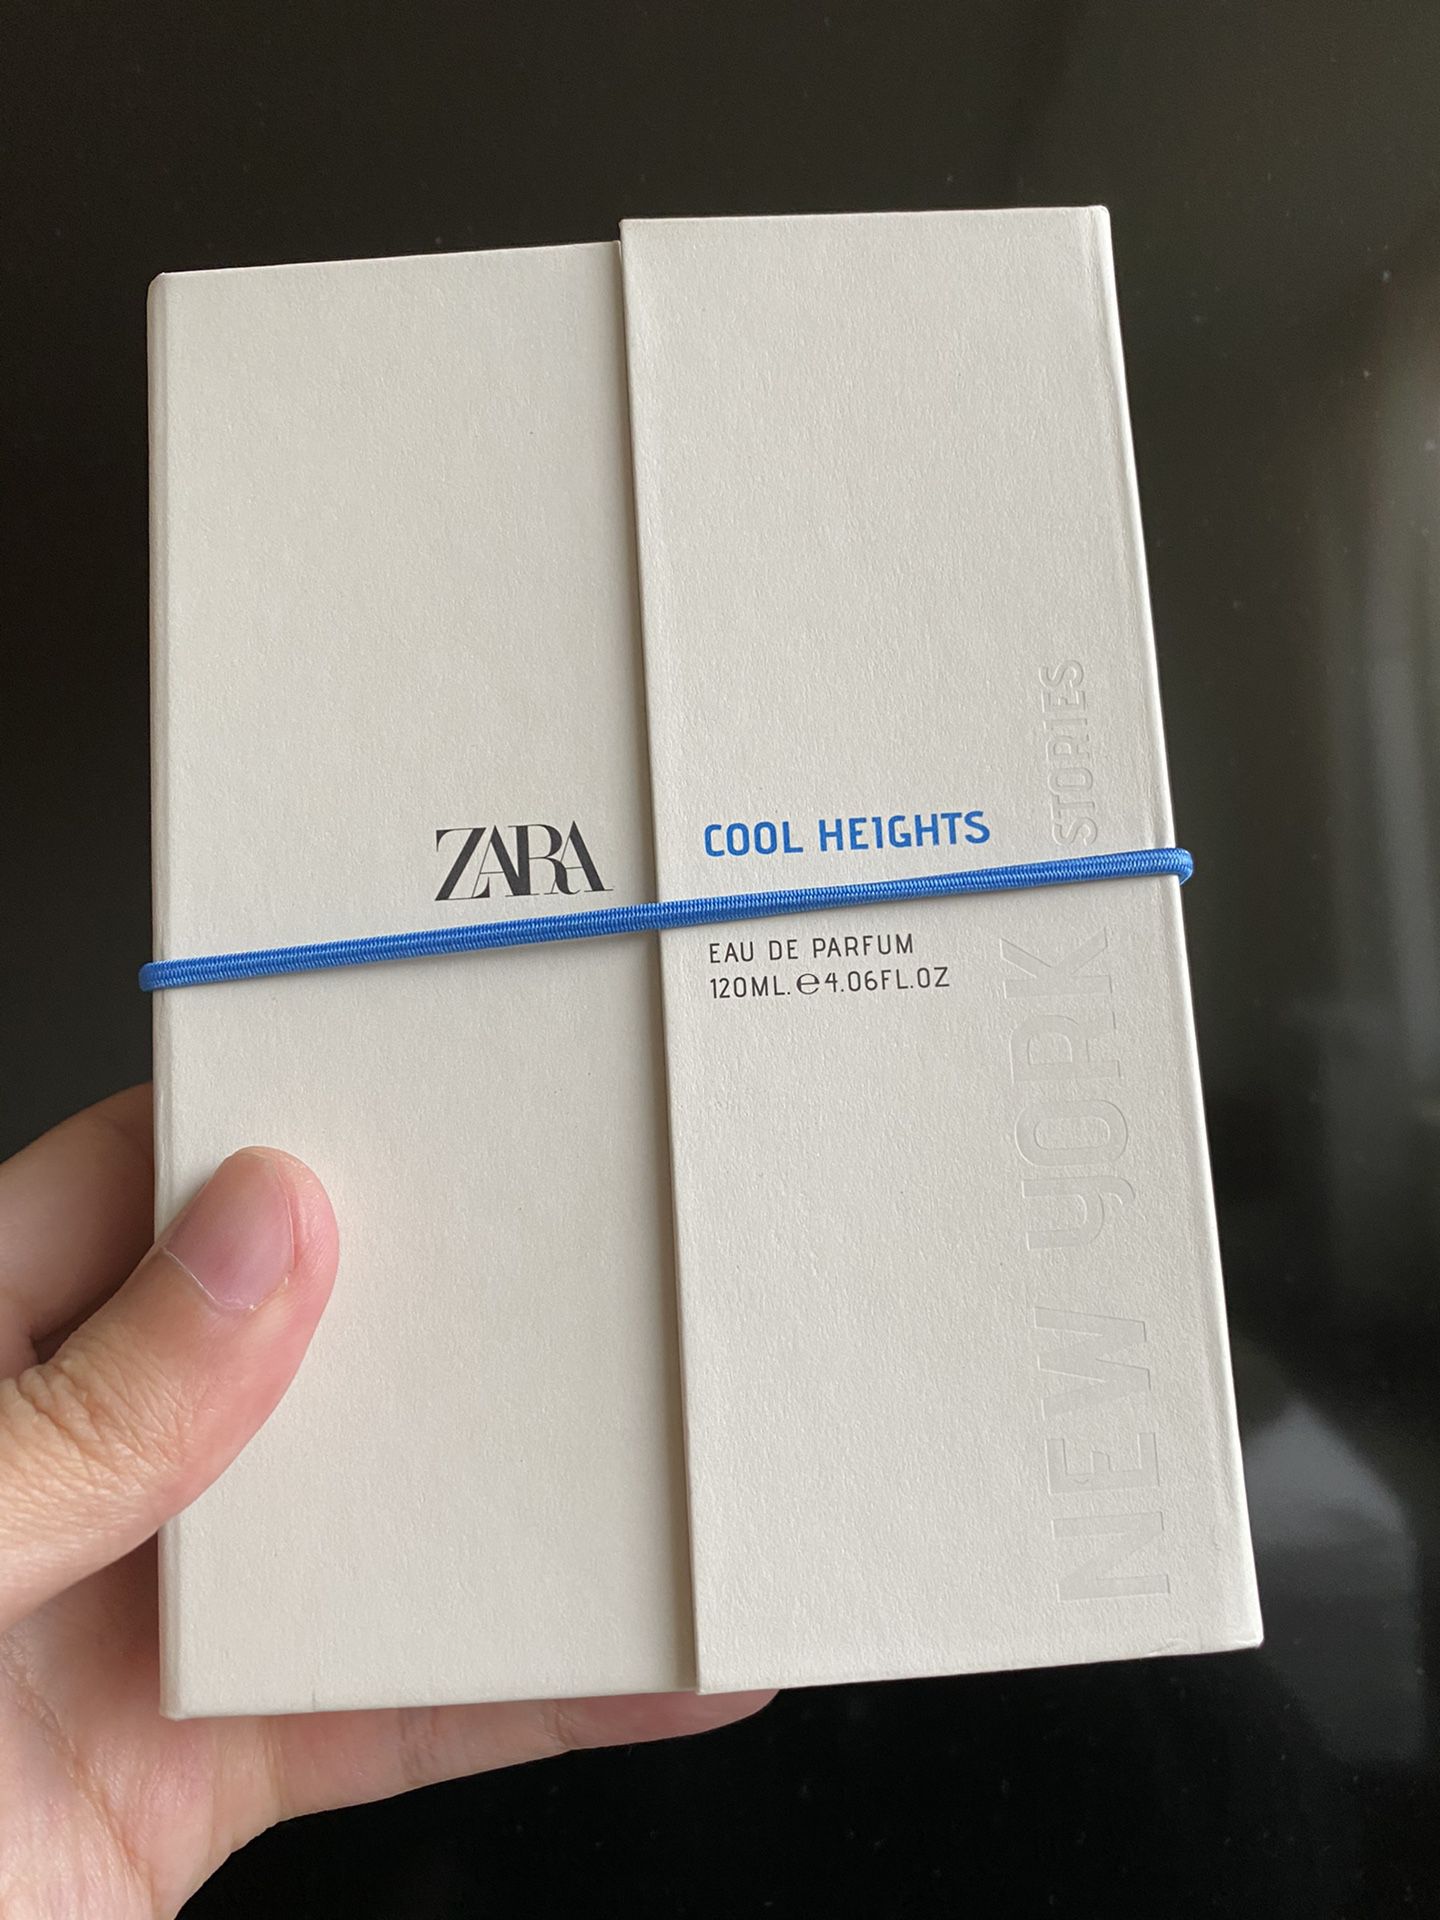 Zara cool heights men’s fragrance Eau De Parfum 120ml